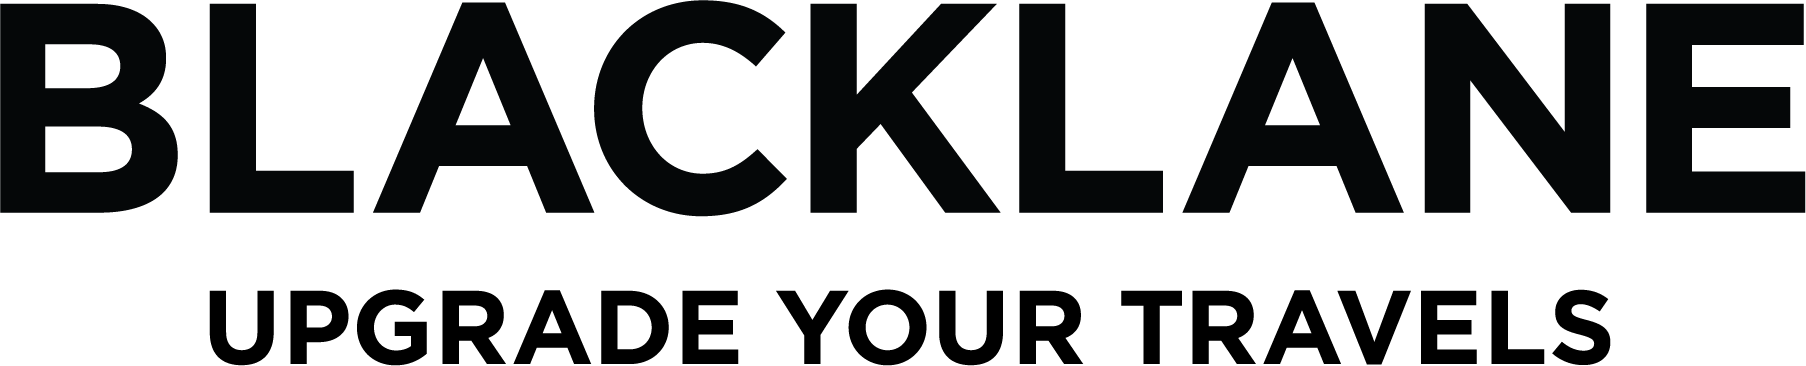 Blacklage logo -- black text.png